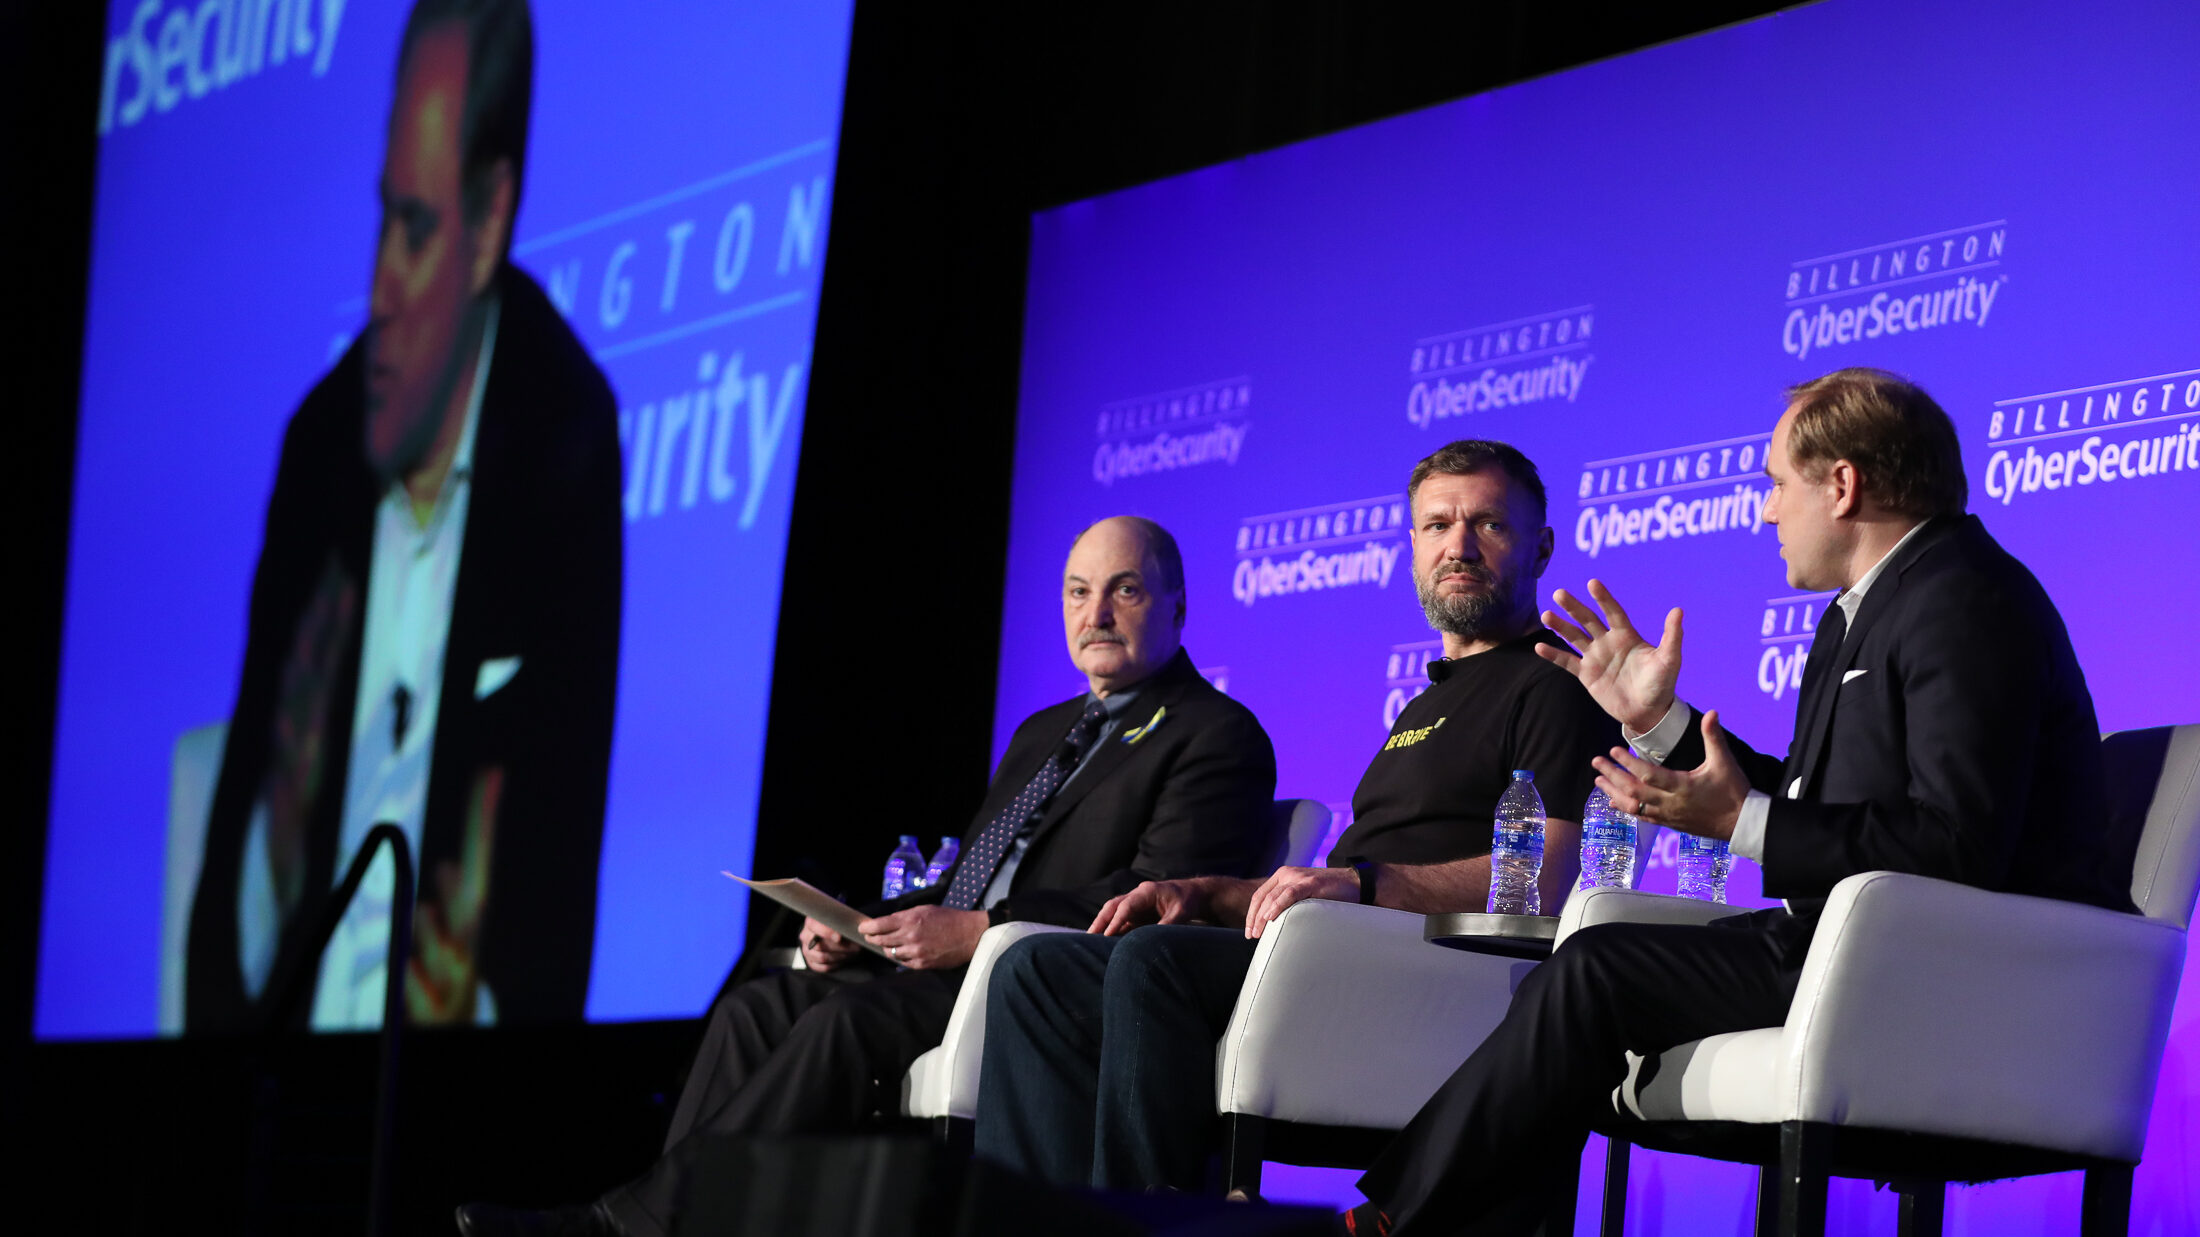 Billington Cybersecurity Summit 2022